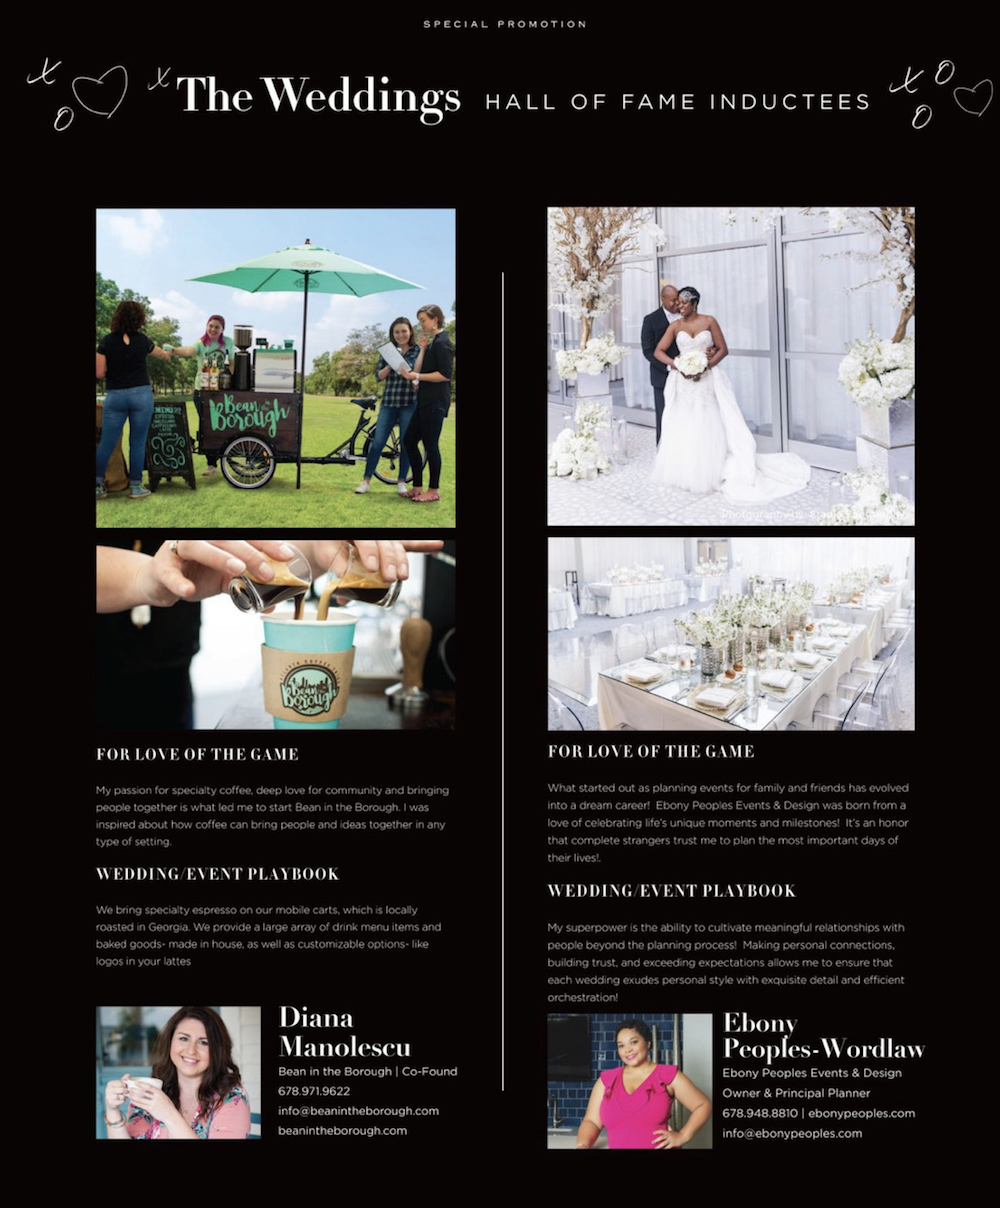 Atlanta Wedding Planner, Dallas Wedding Planner, Ebony Peoples Events & Design, Wedding Planner, Event Planner, Party Planner